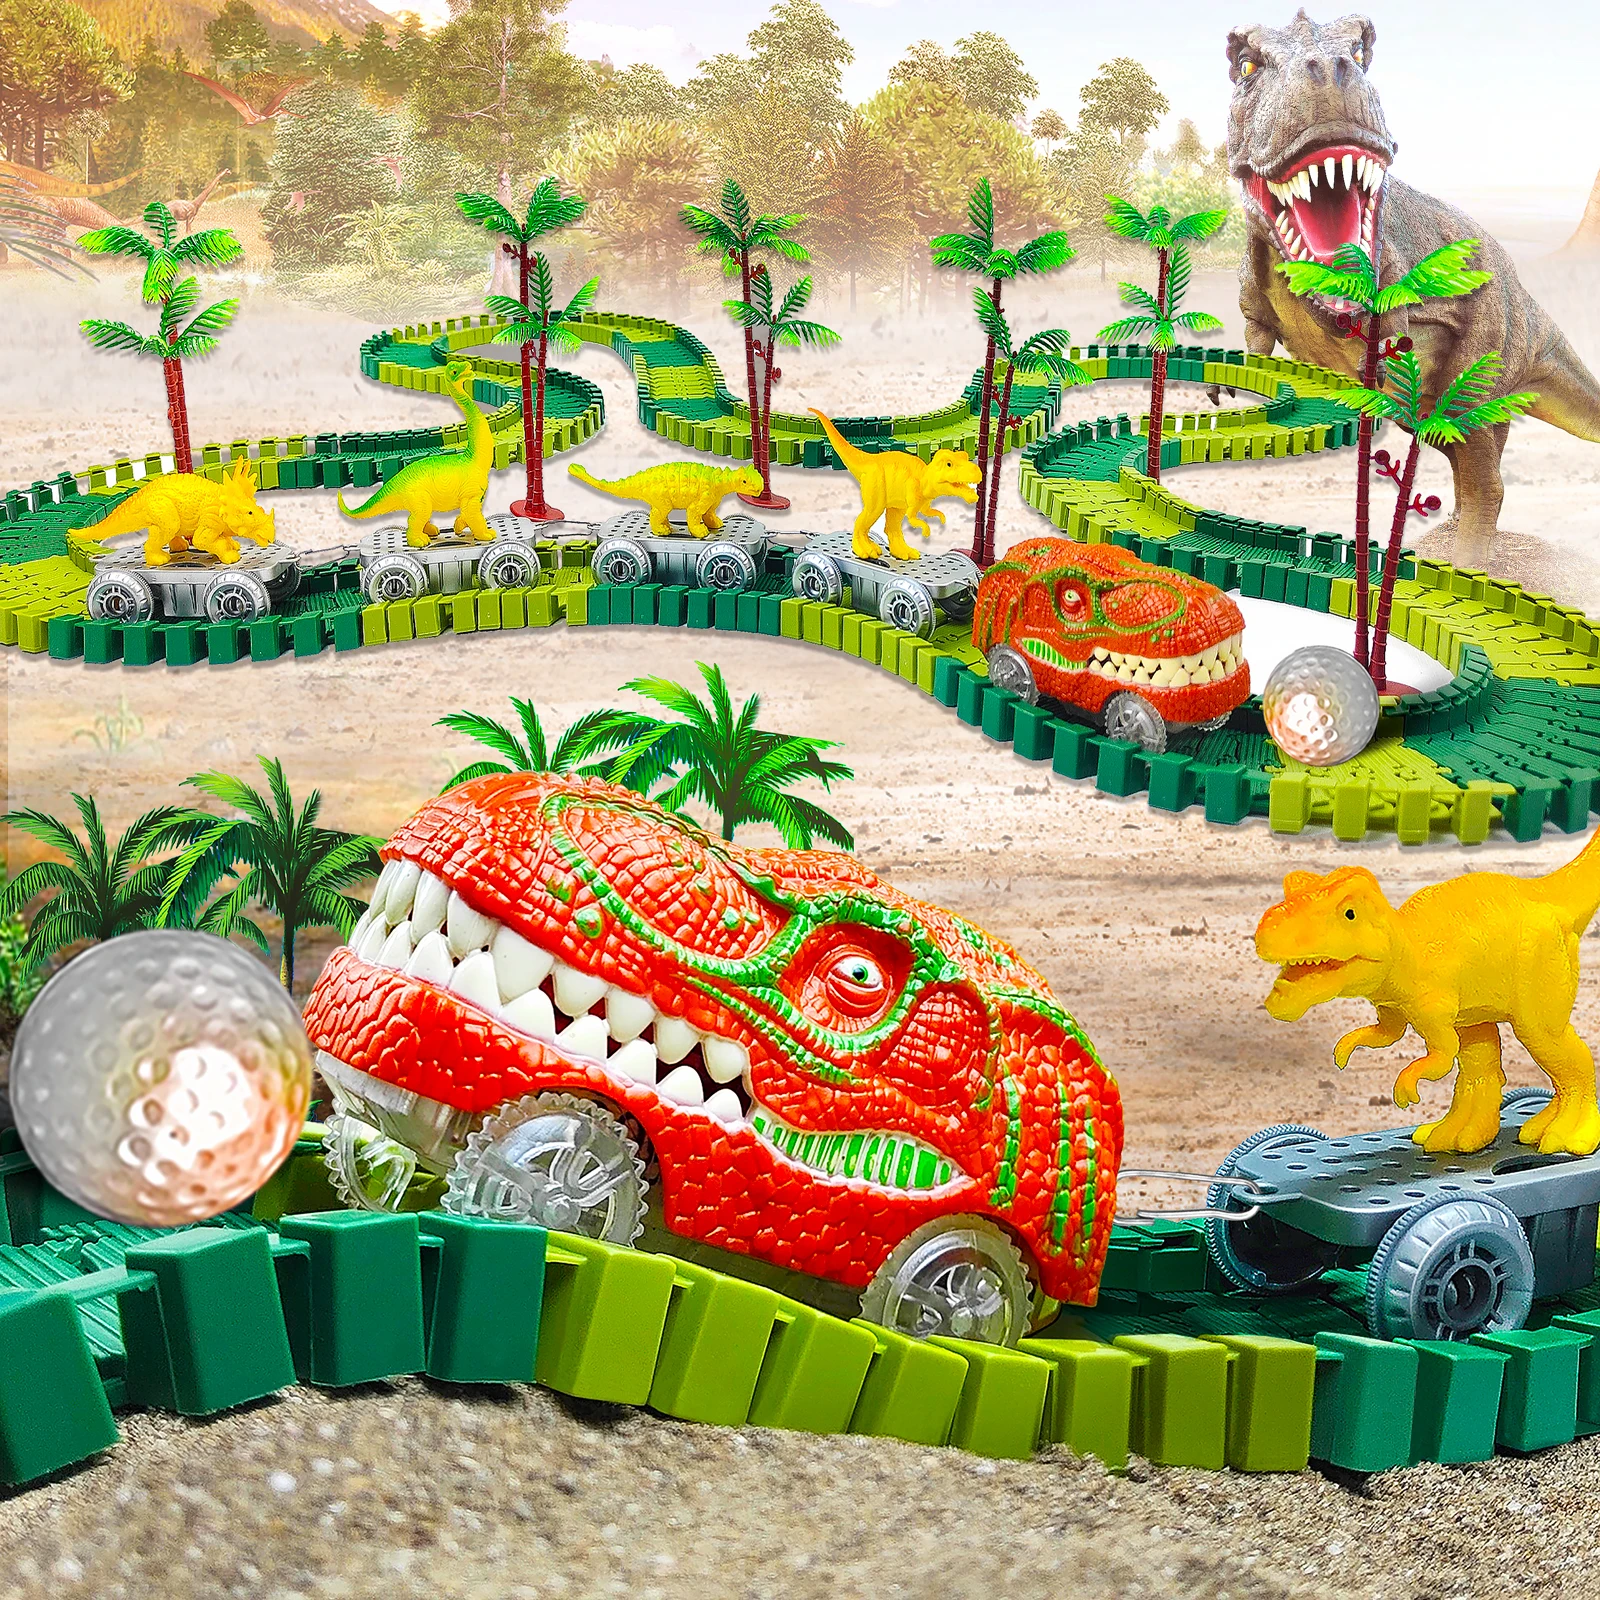 Race car track toys create dinosaur world race flexible tracks train gift for kids ages thumb200